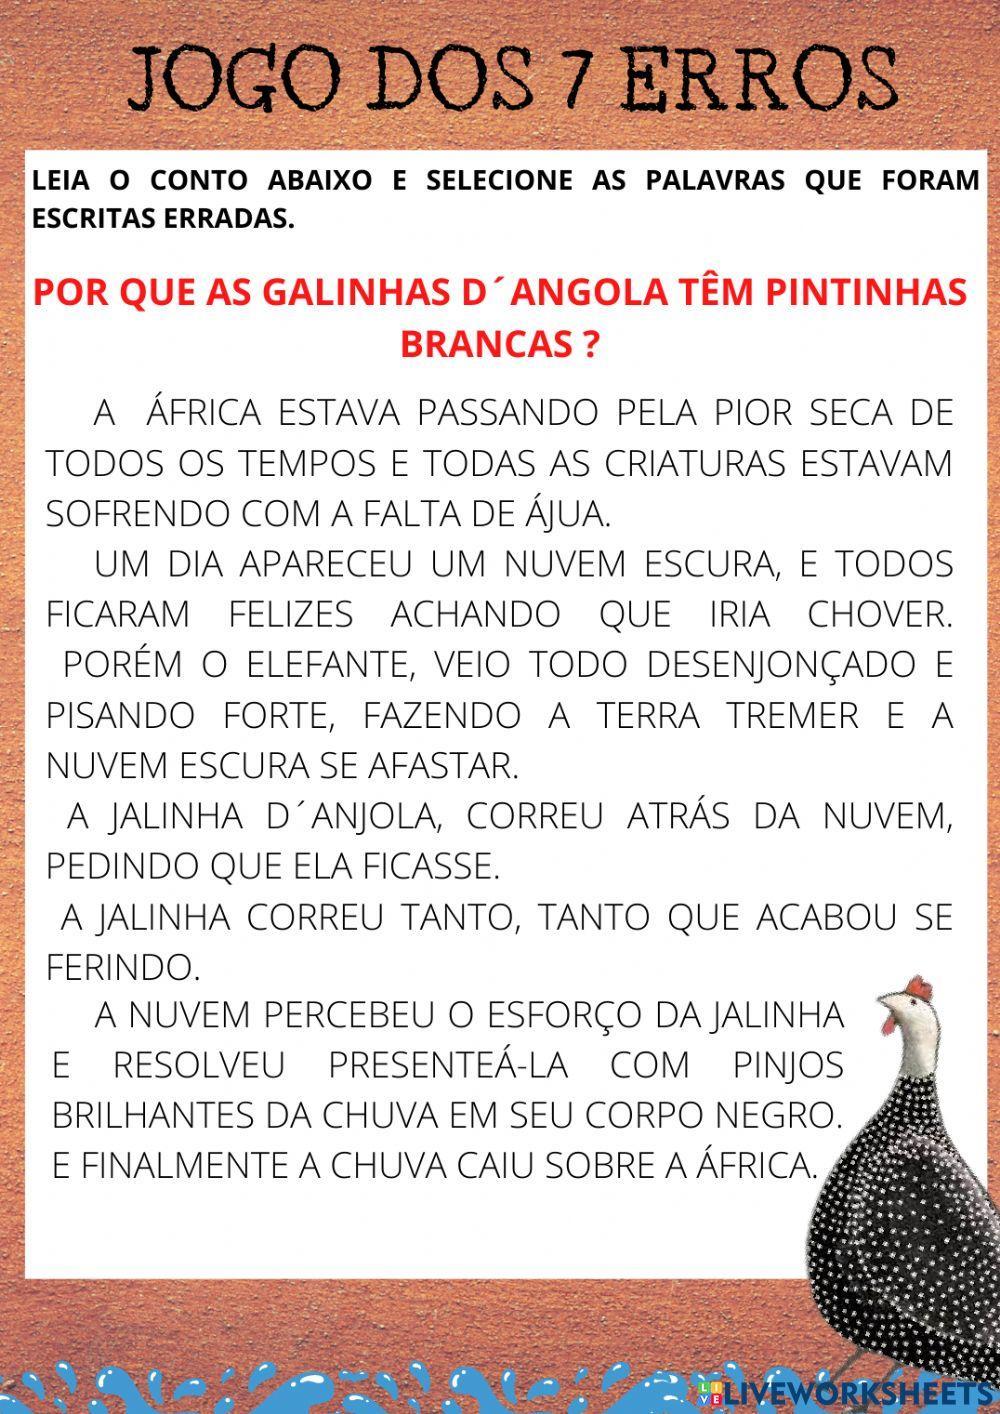 Conto africano: A galinha d-angola